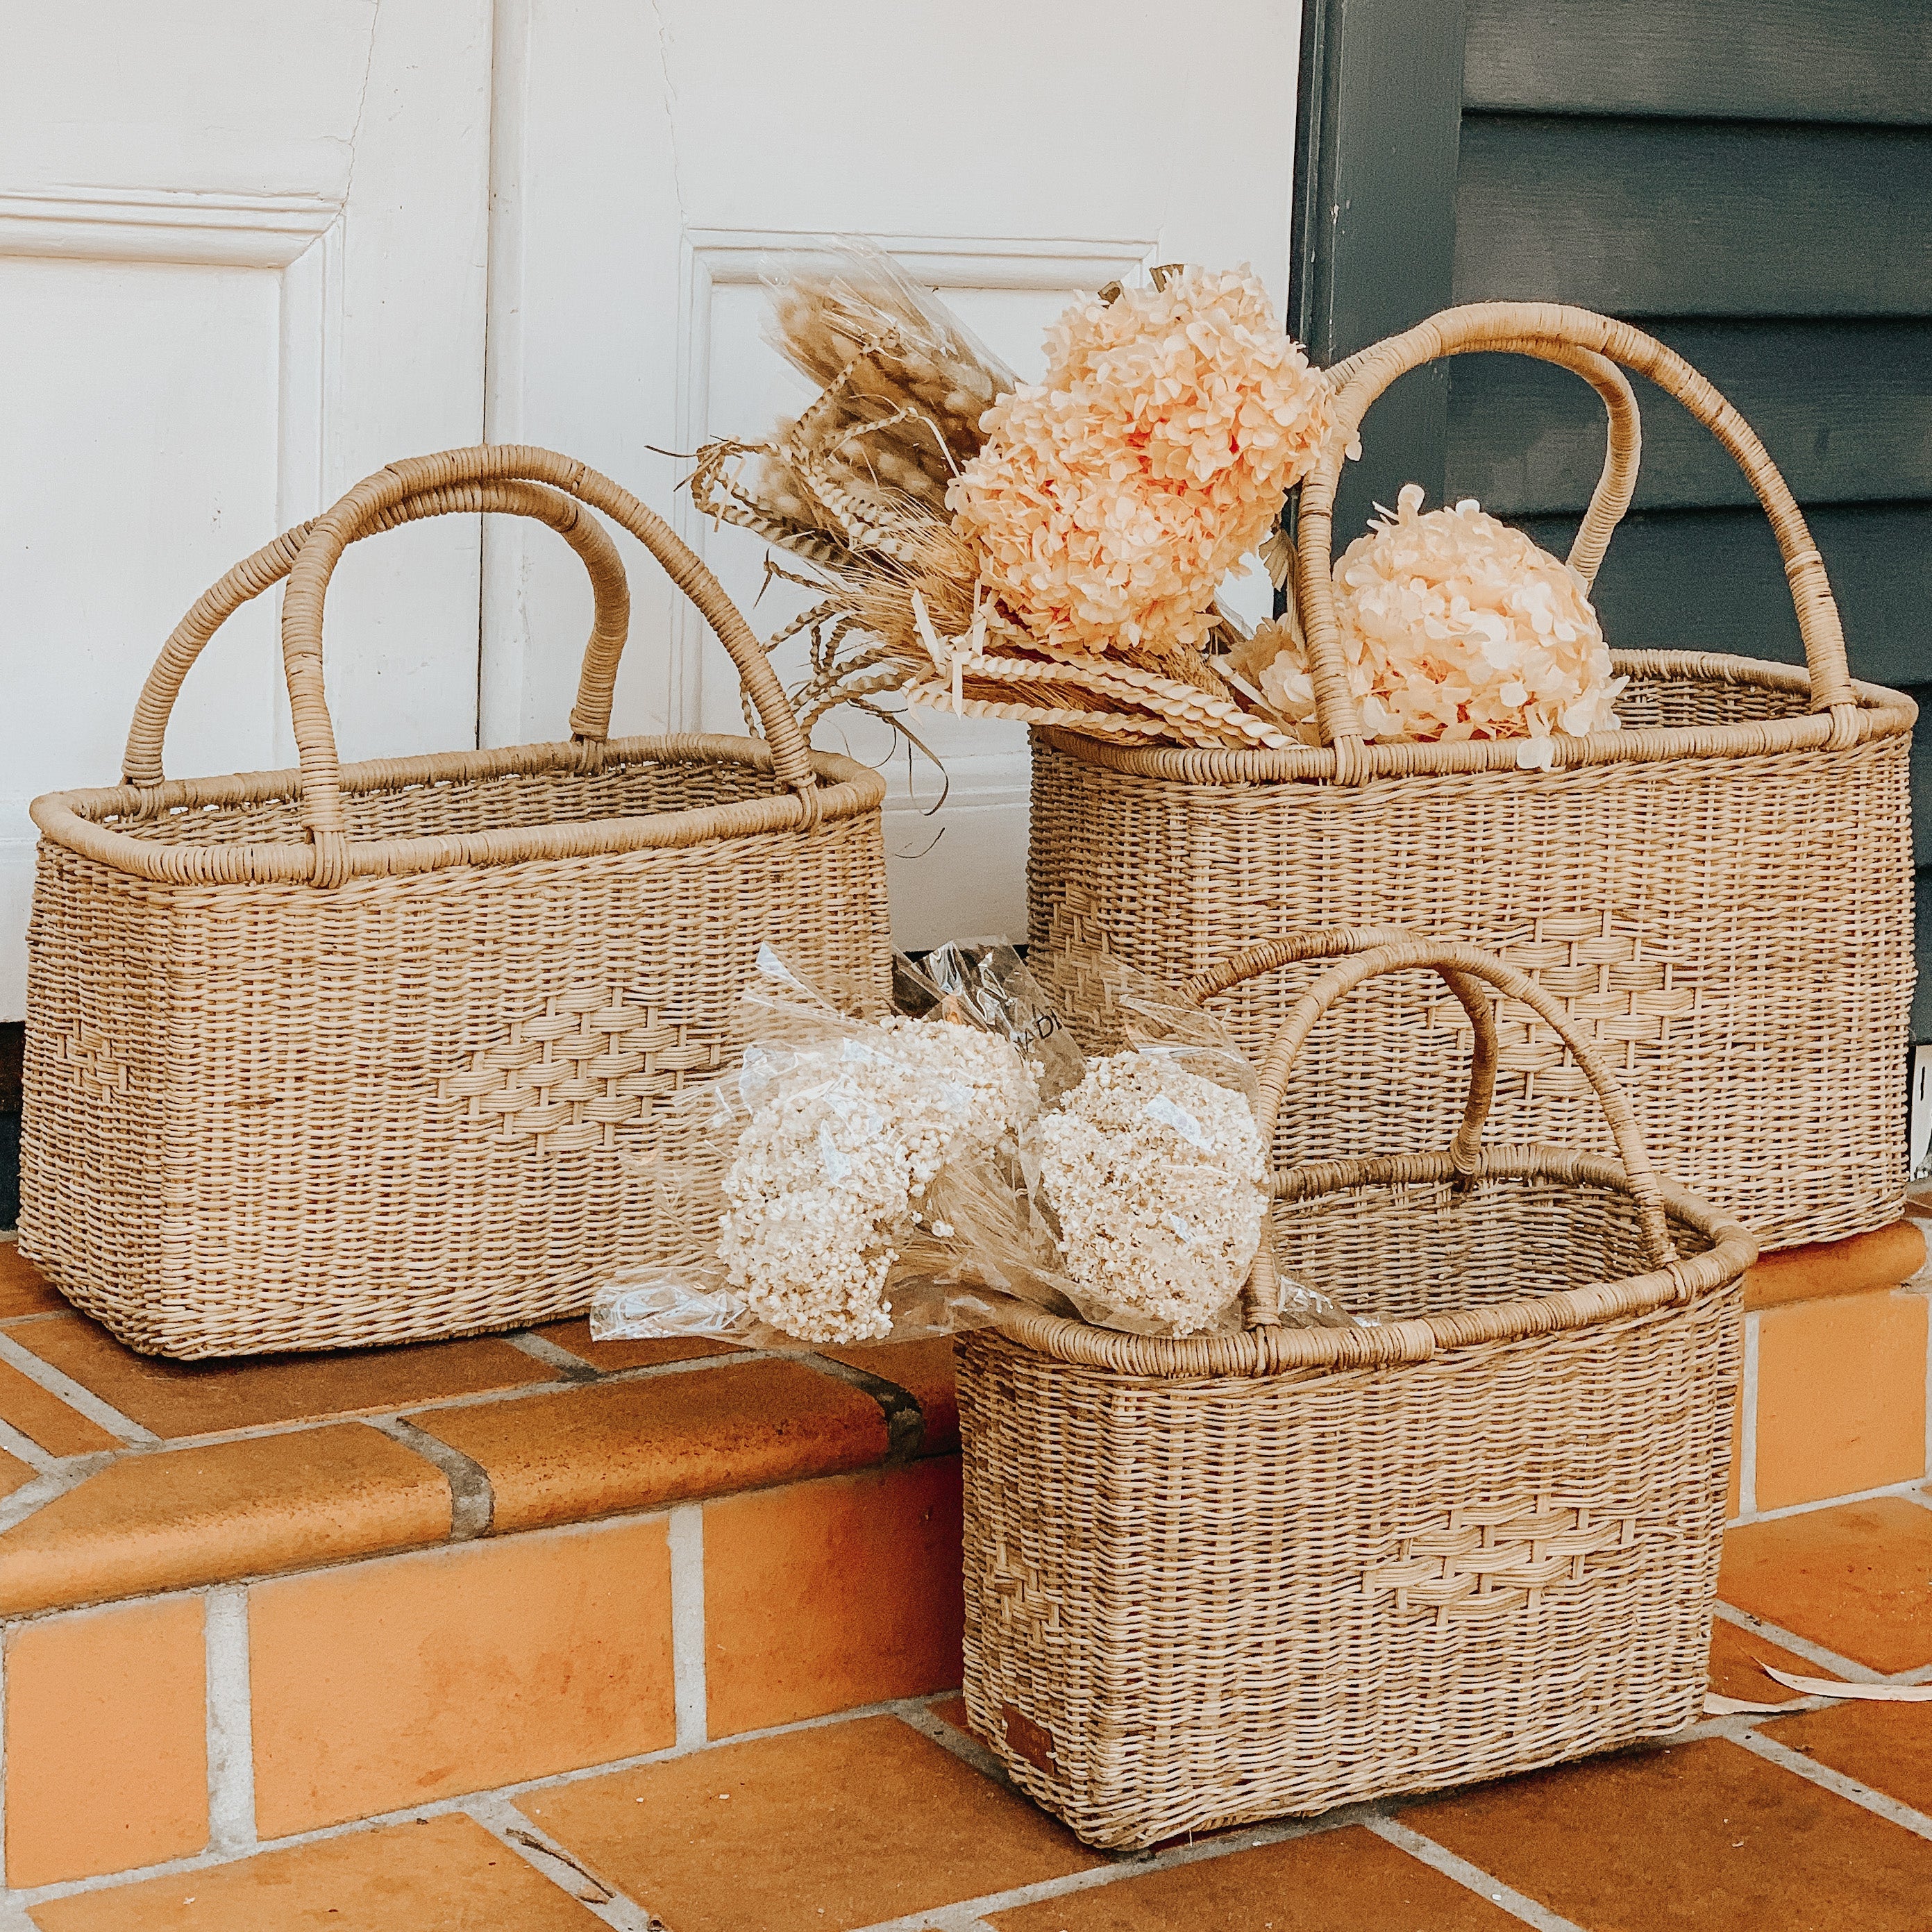 classic market baskets